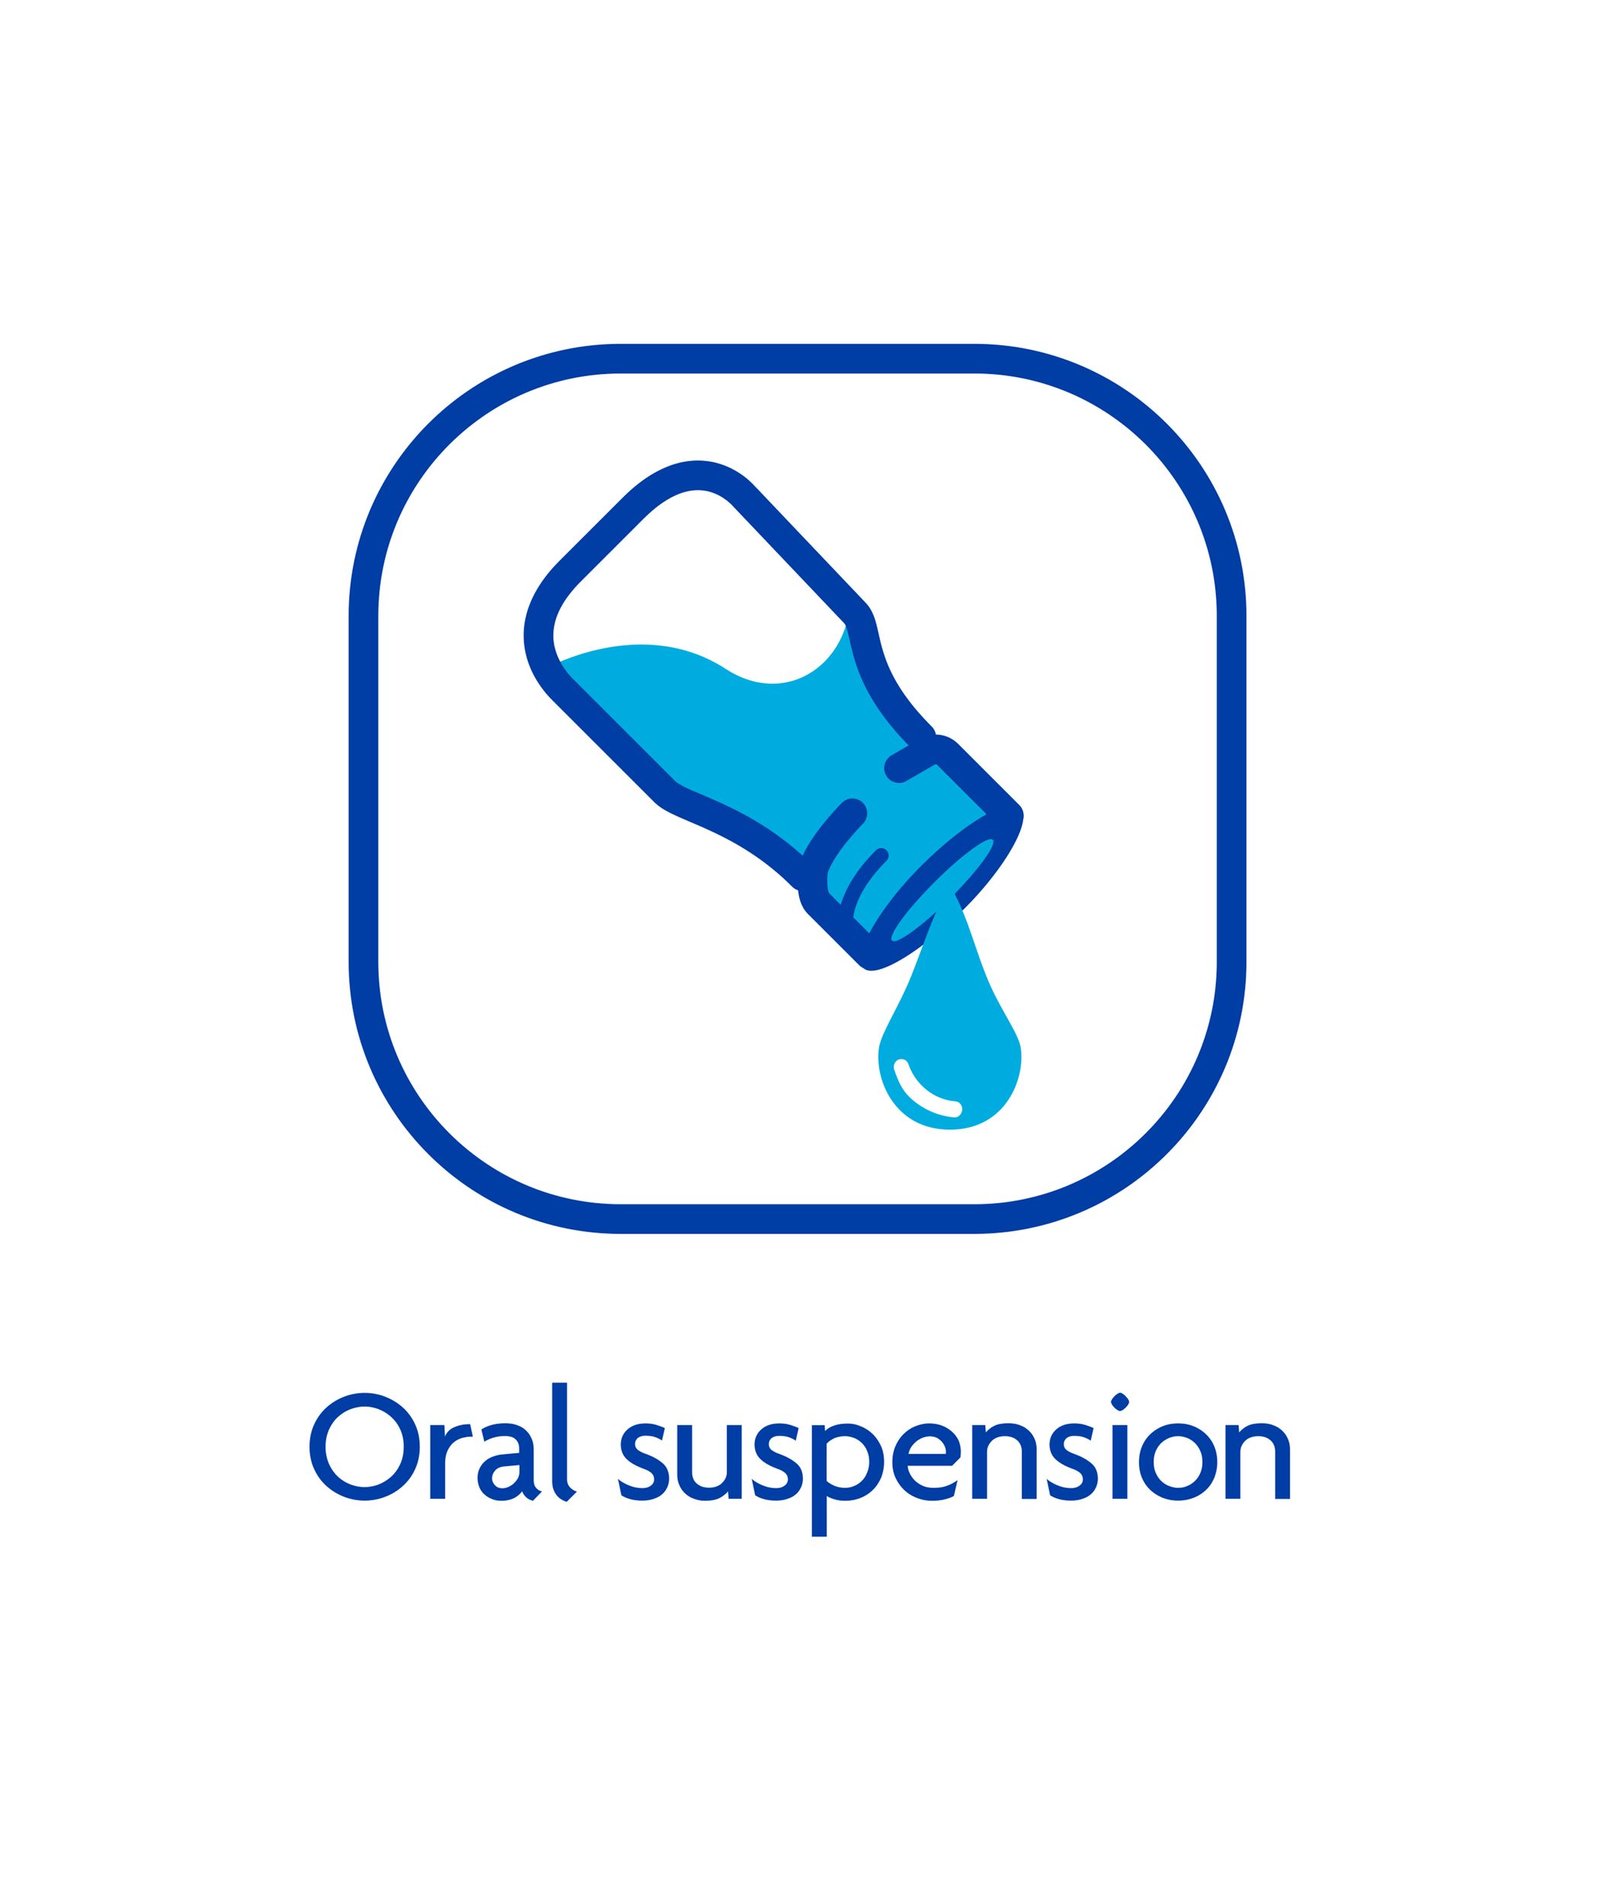 Alvedon 24 mg/ml Paracetamol Oral suspension 100 ml